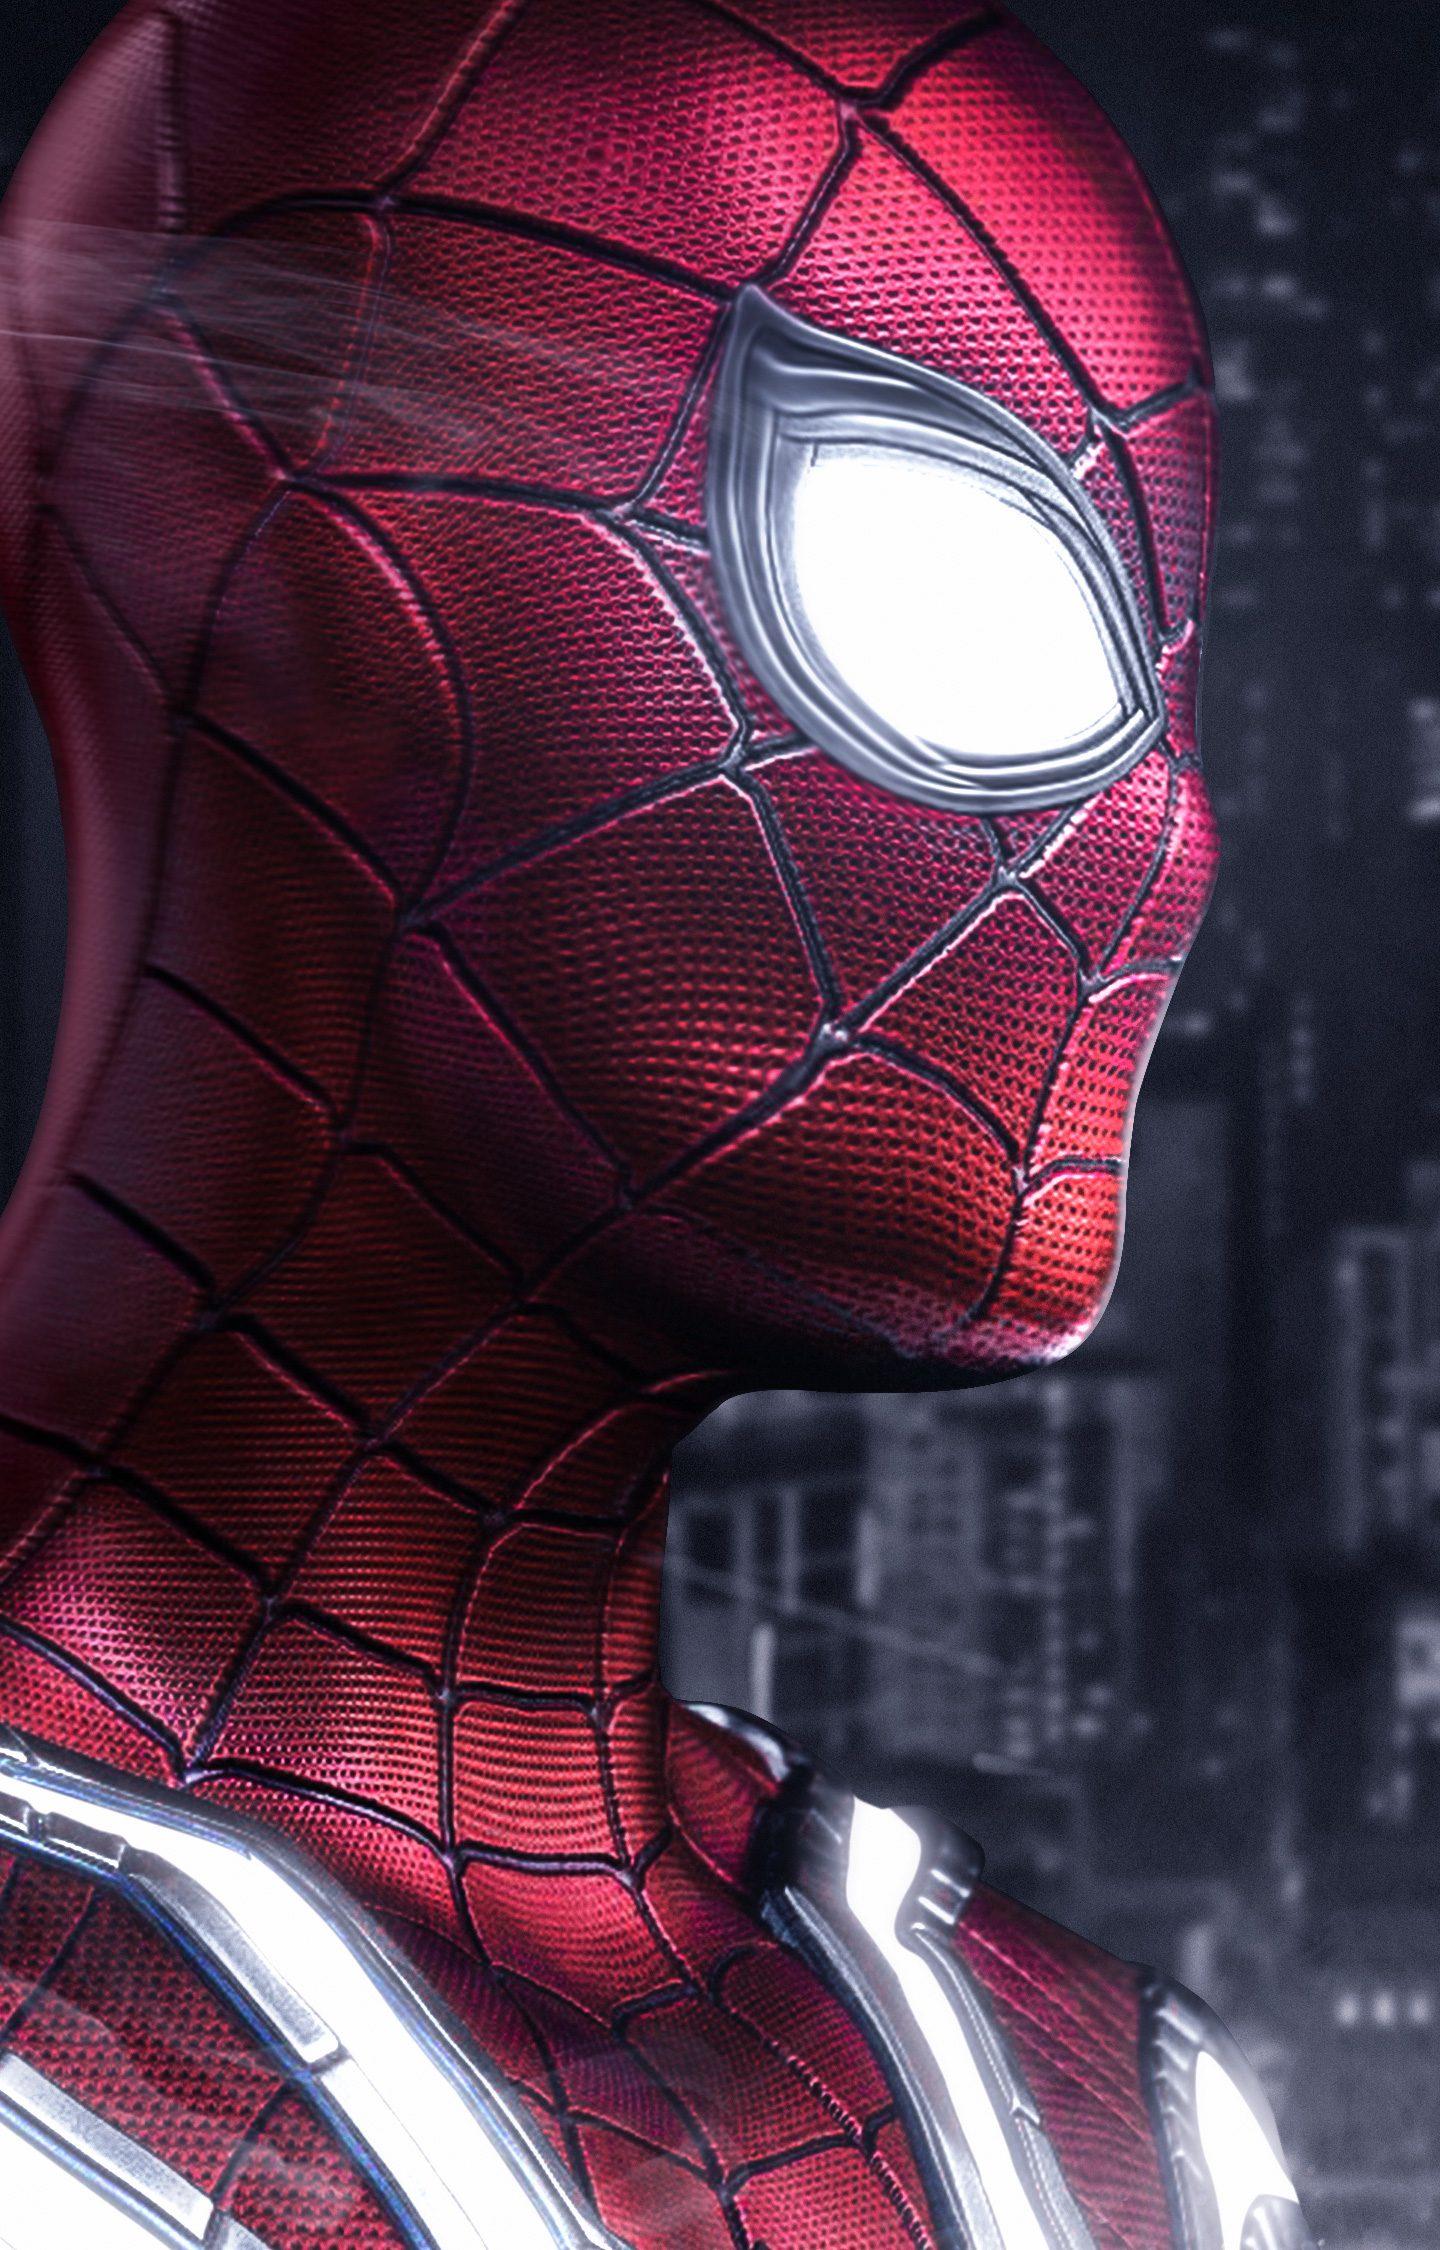 Spiderman Artwork 4K Wallpaper